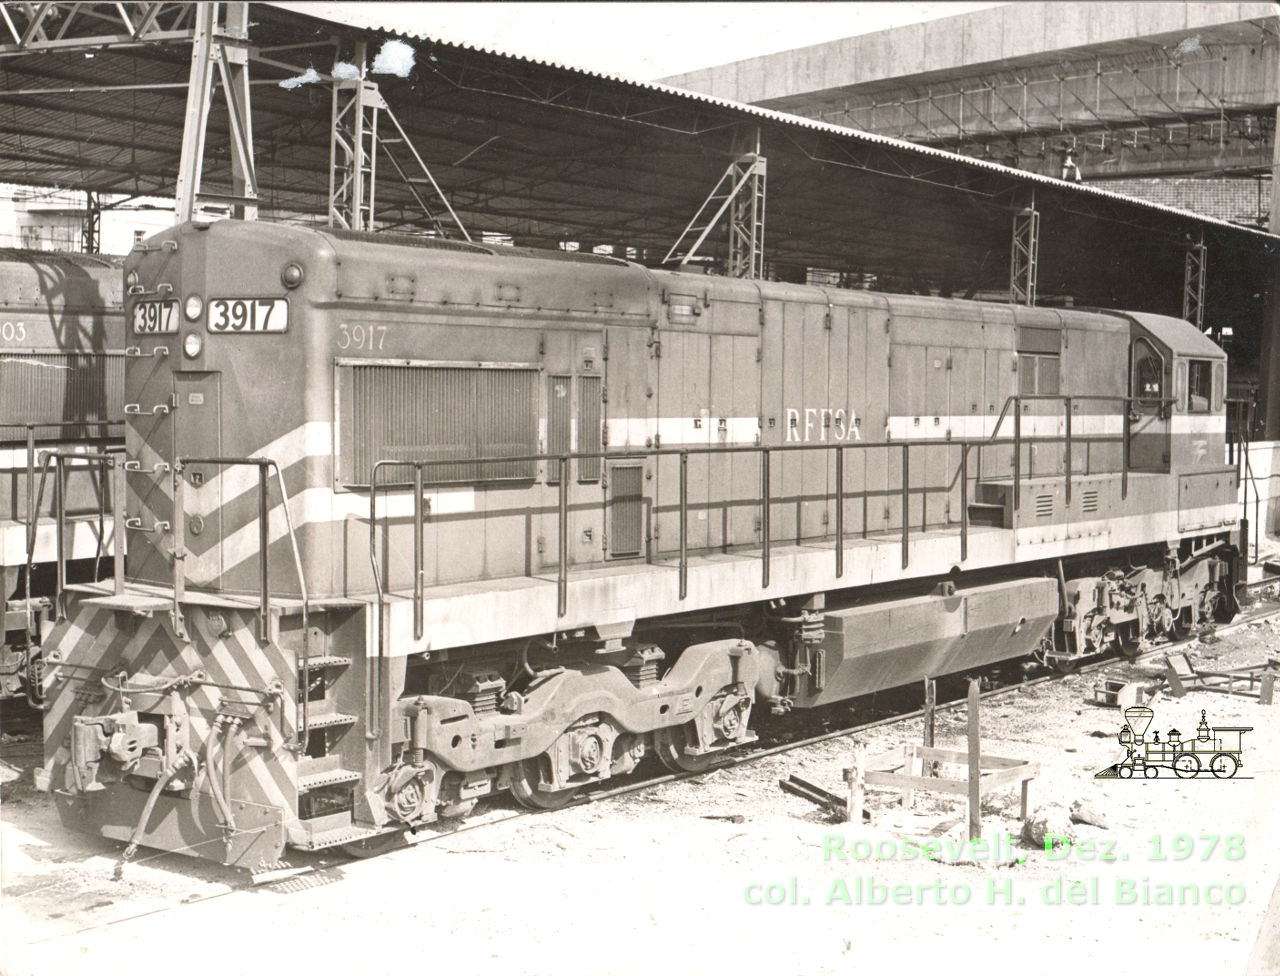 Locomotiva GE U23C nº 3917 RFFSA em Roosevelt, Dez. 1978